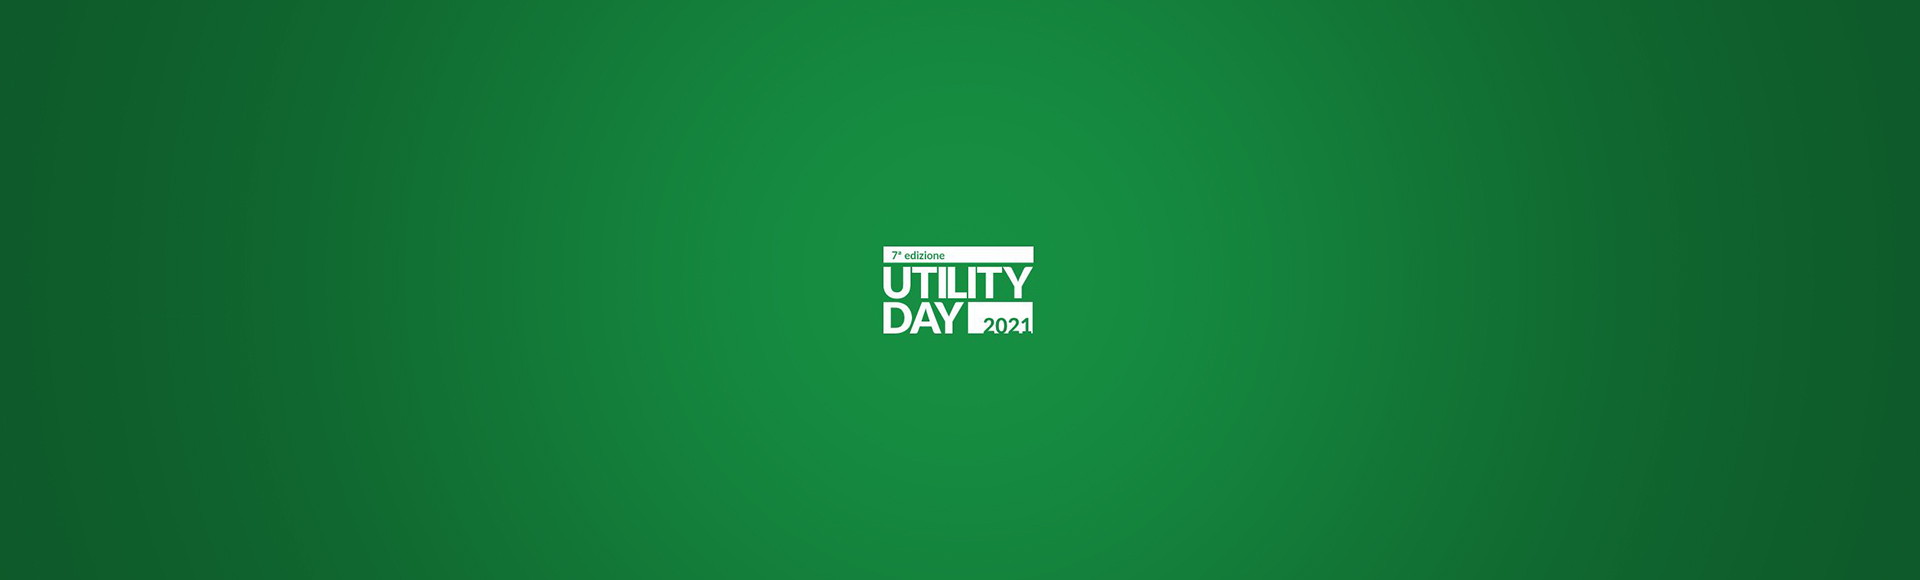 Utility Day 2021